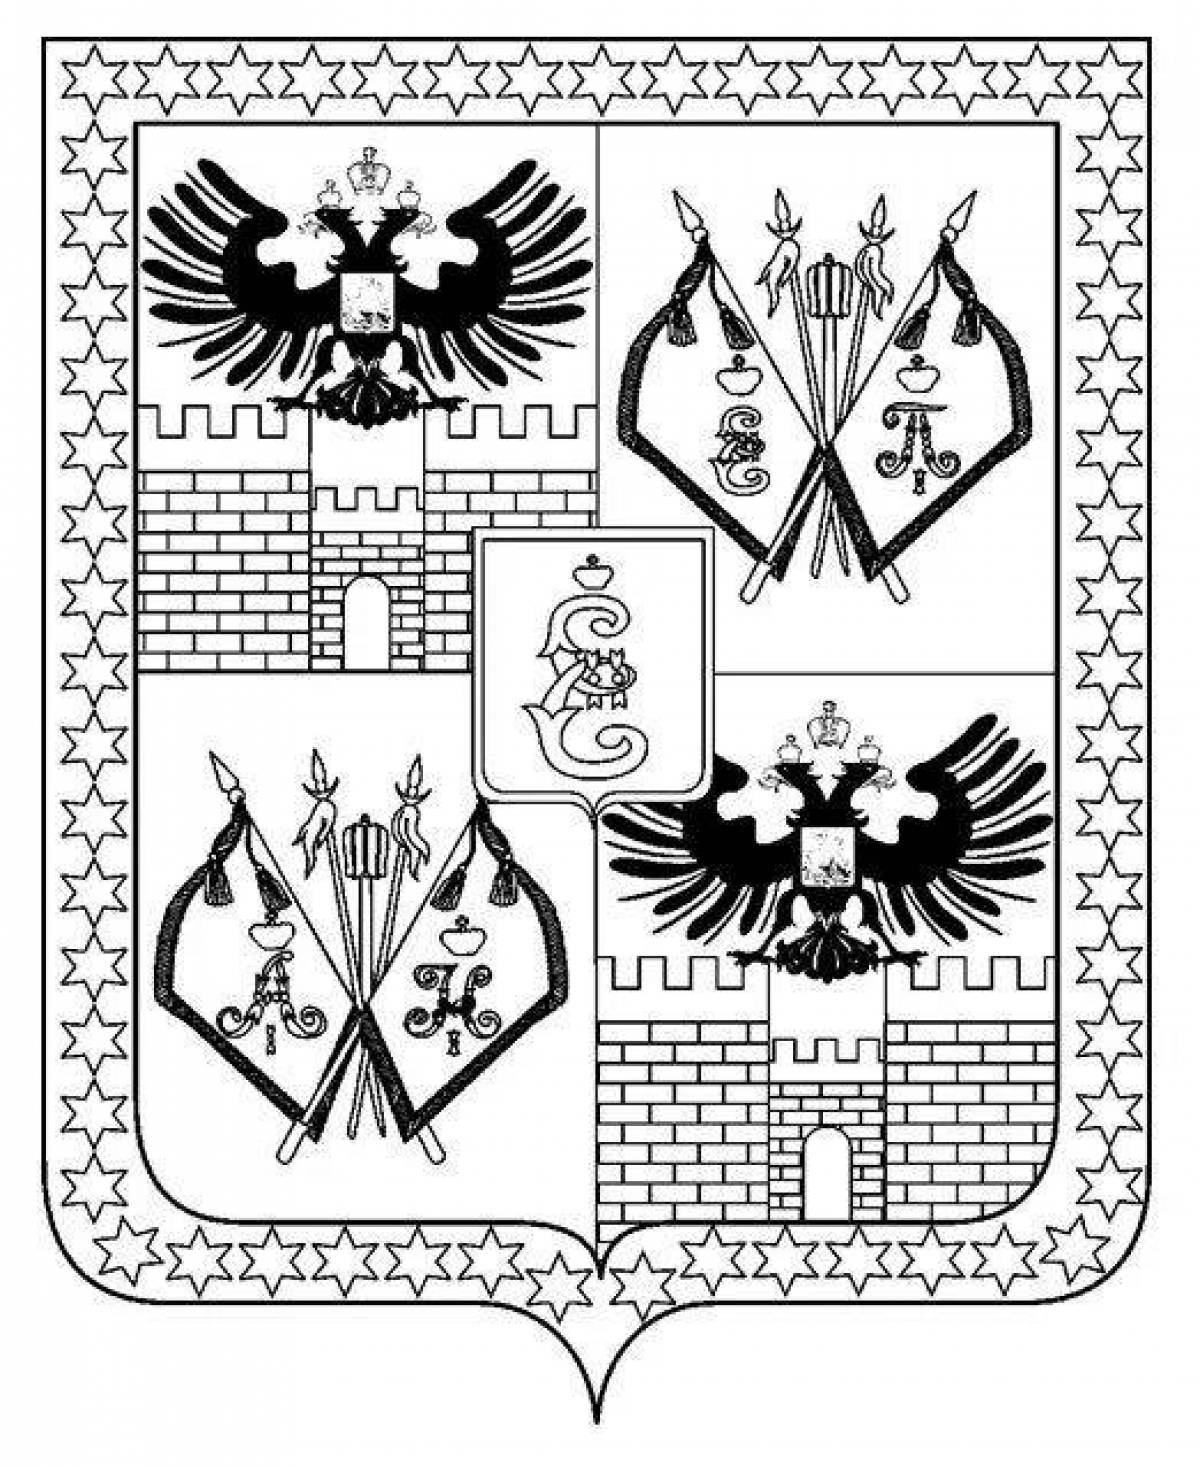 Emblem of krasnodar #2